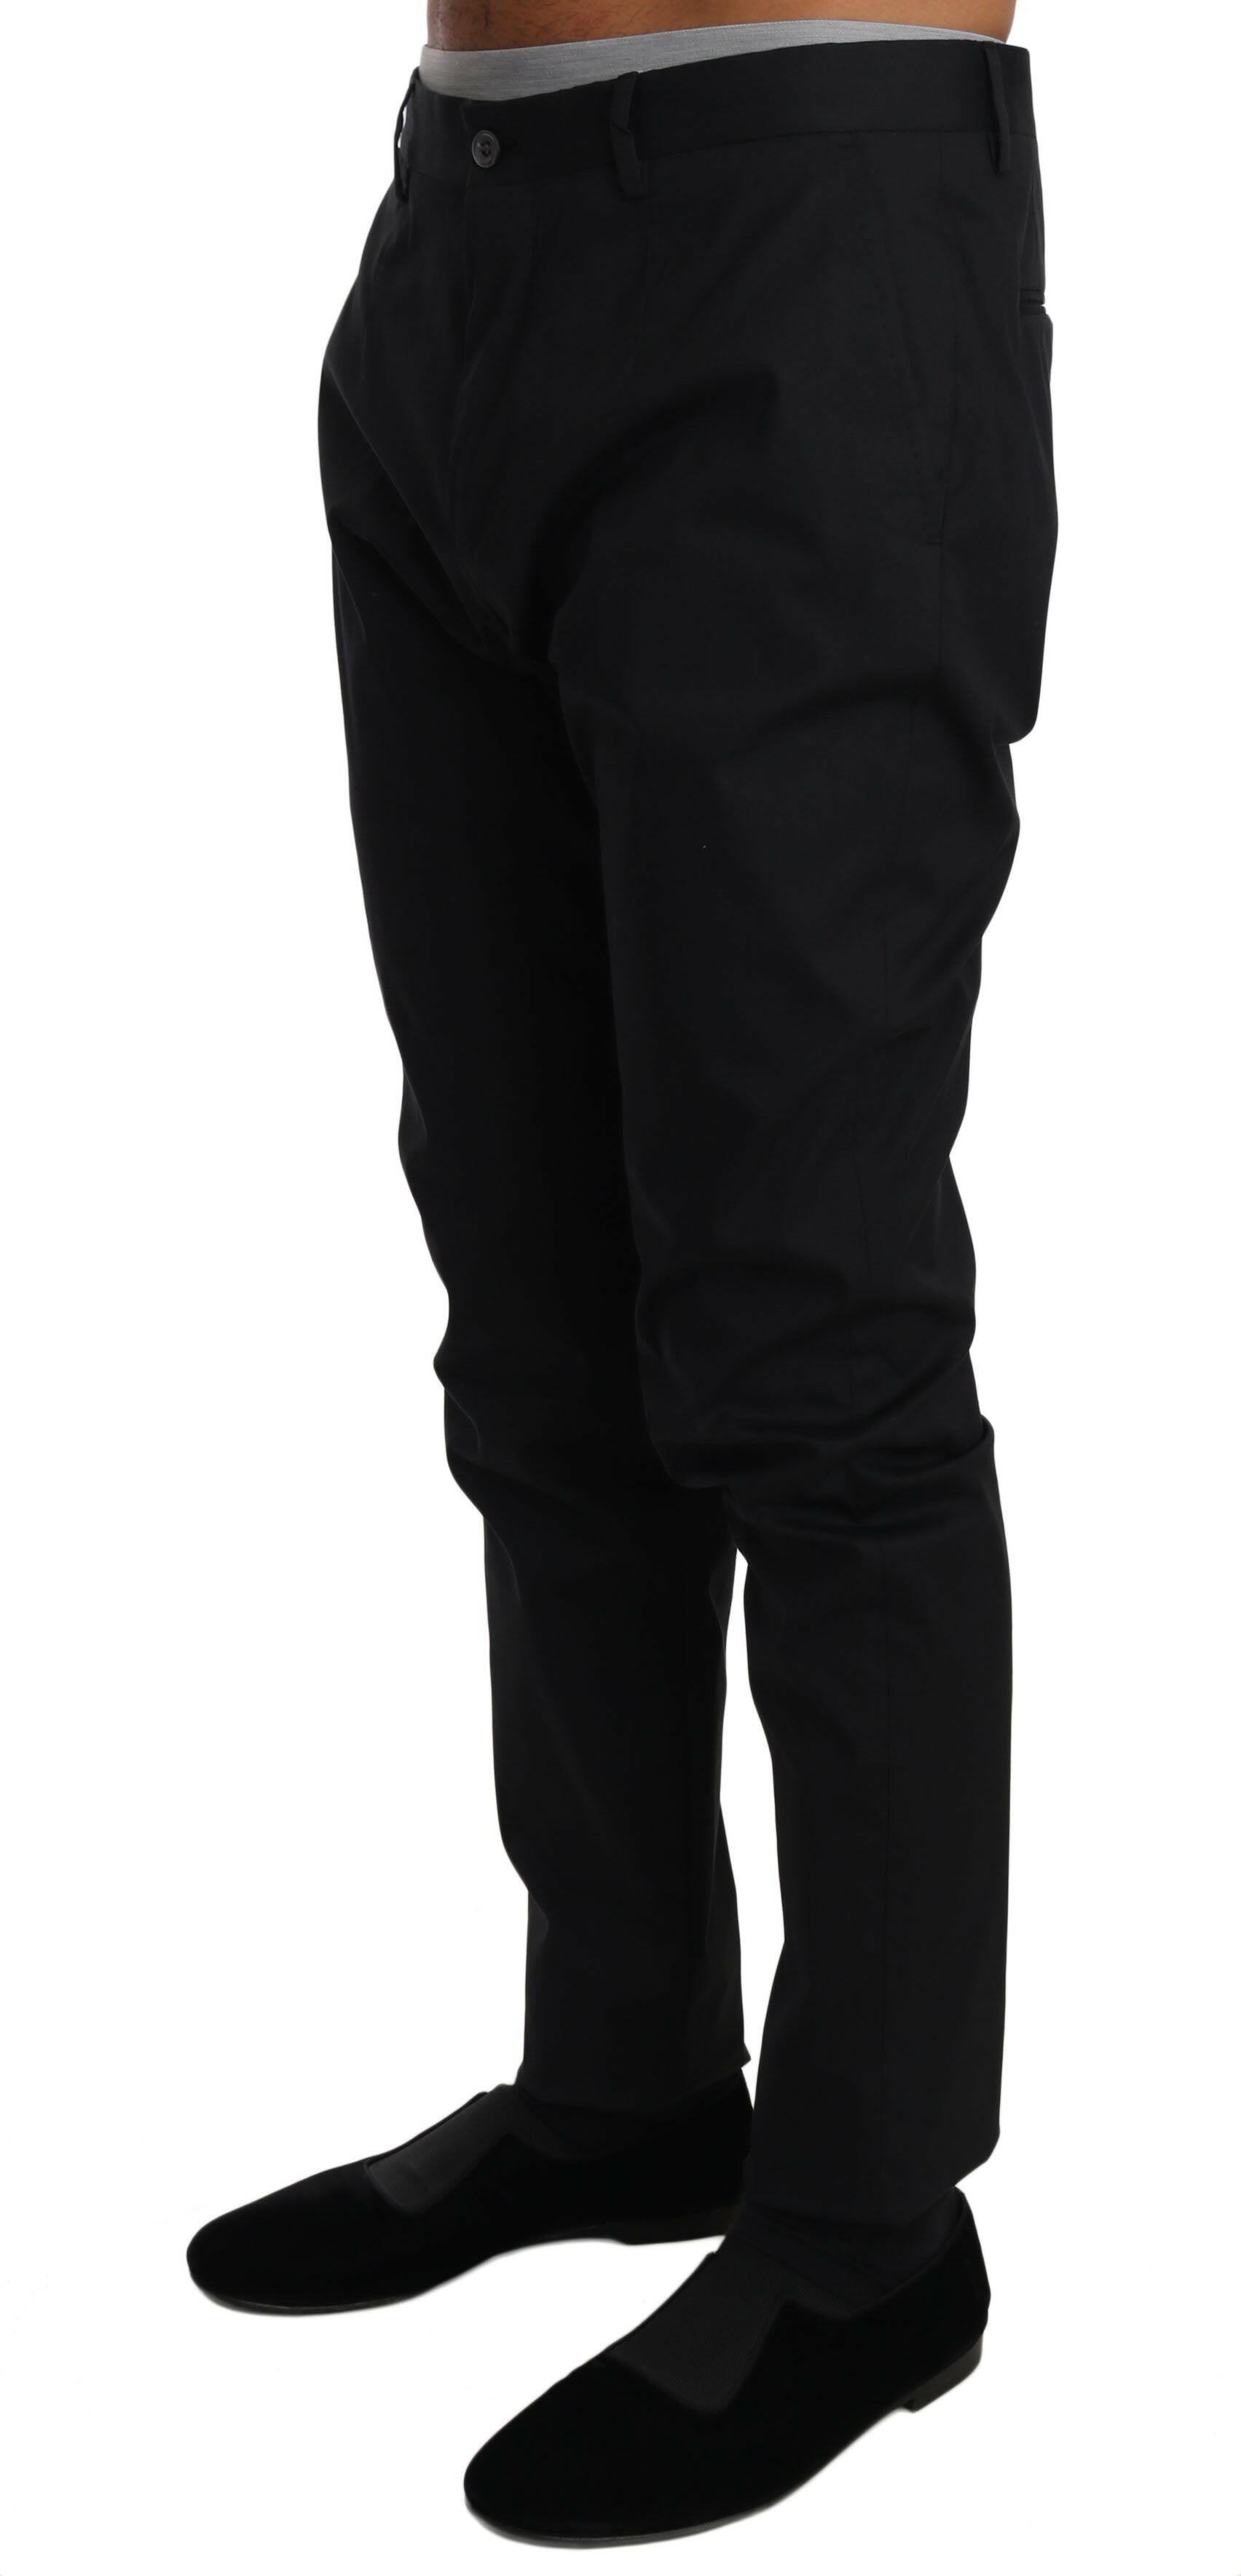 Dolce & Gabbana Black Cotton Stretch Formal Trousers Pants - GENUINE AUTHENTIC BRAND LLC  